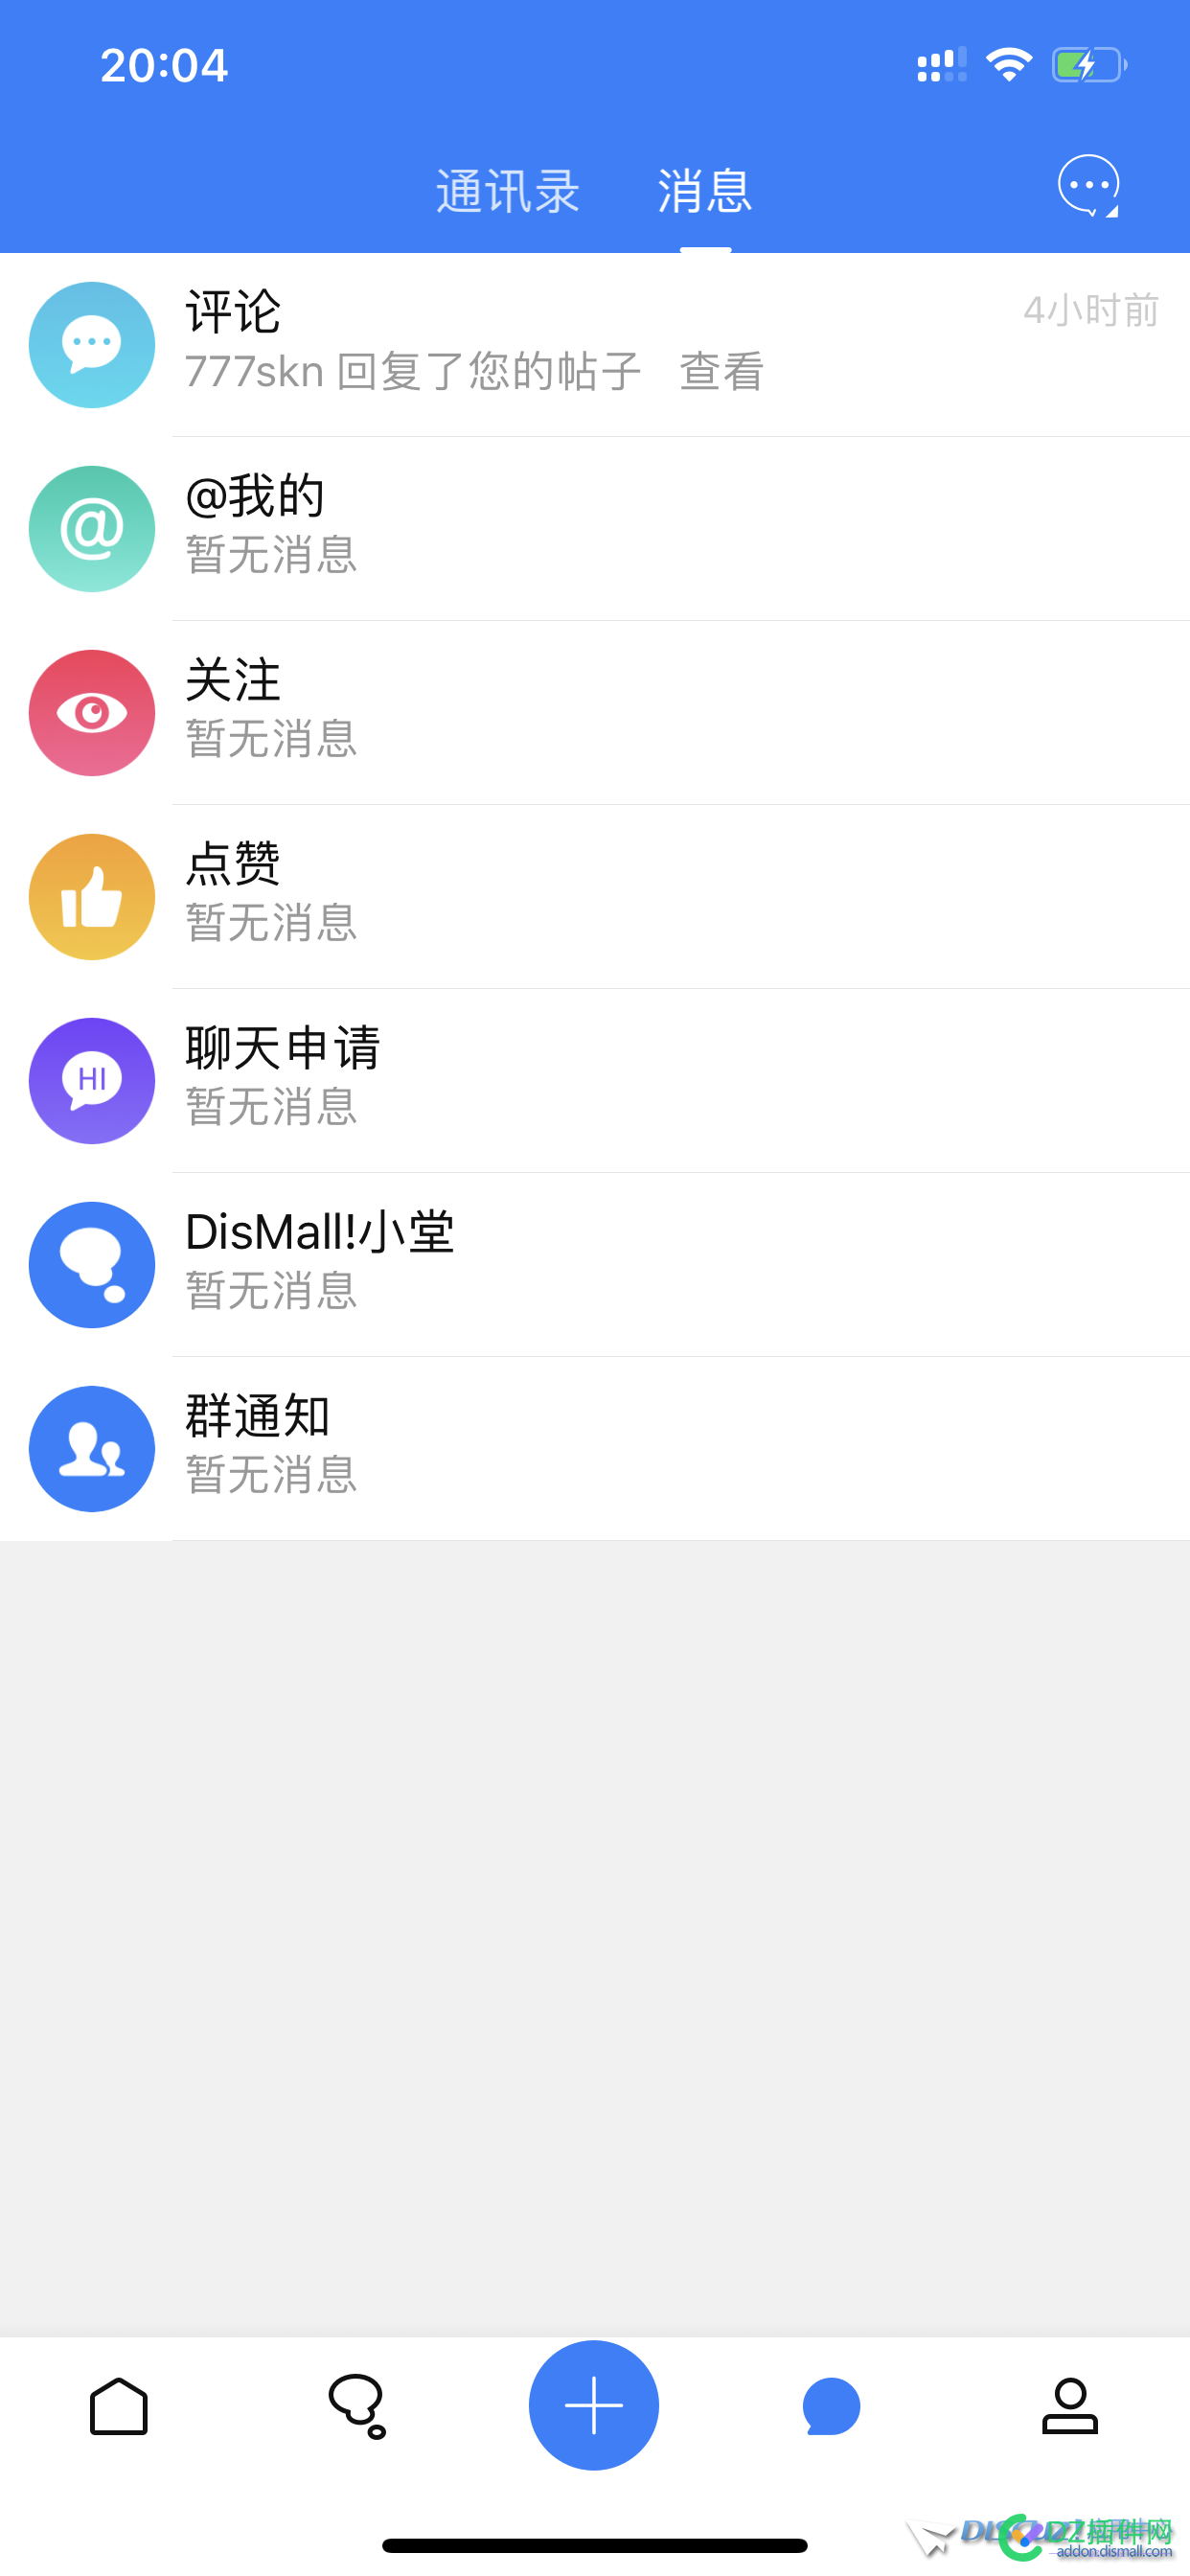 DisMall 社区移动客户端[Ver1.0.6] 正式发布（iOS/Android 齐发） 社区,移动,客户,客户端,正式